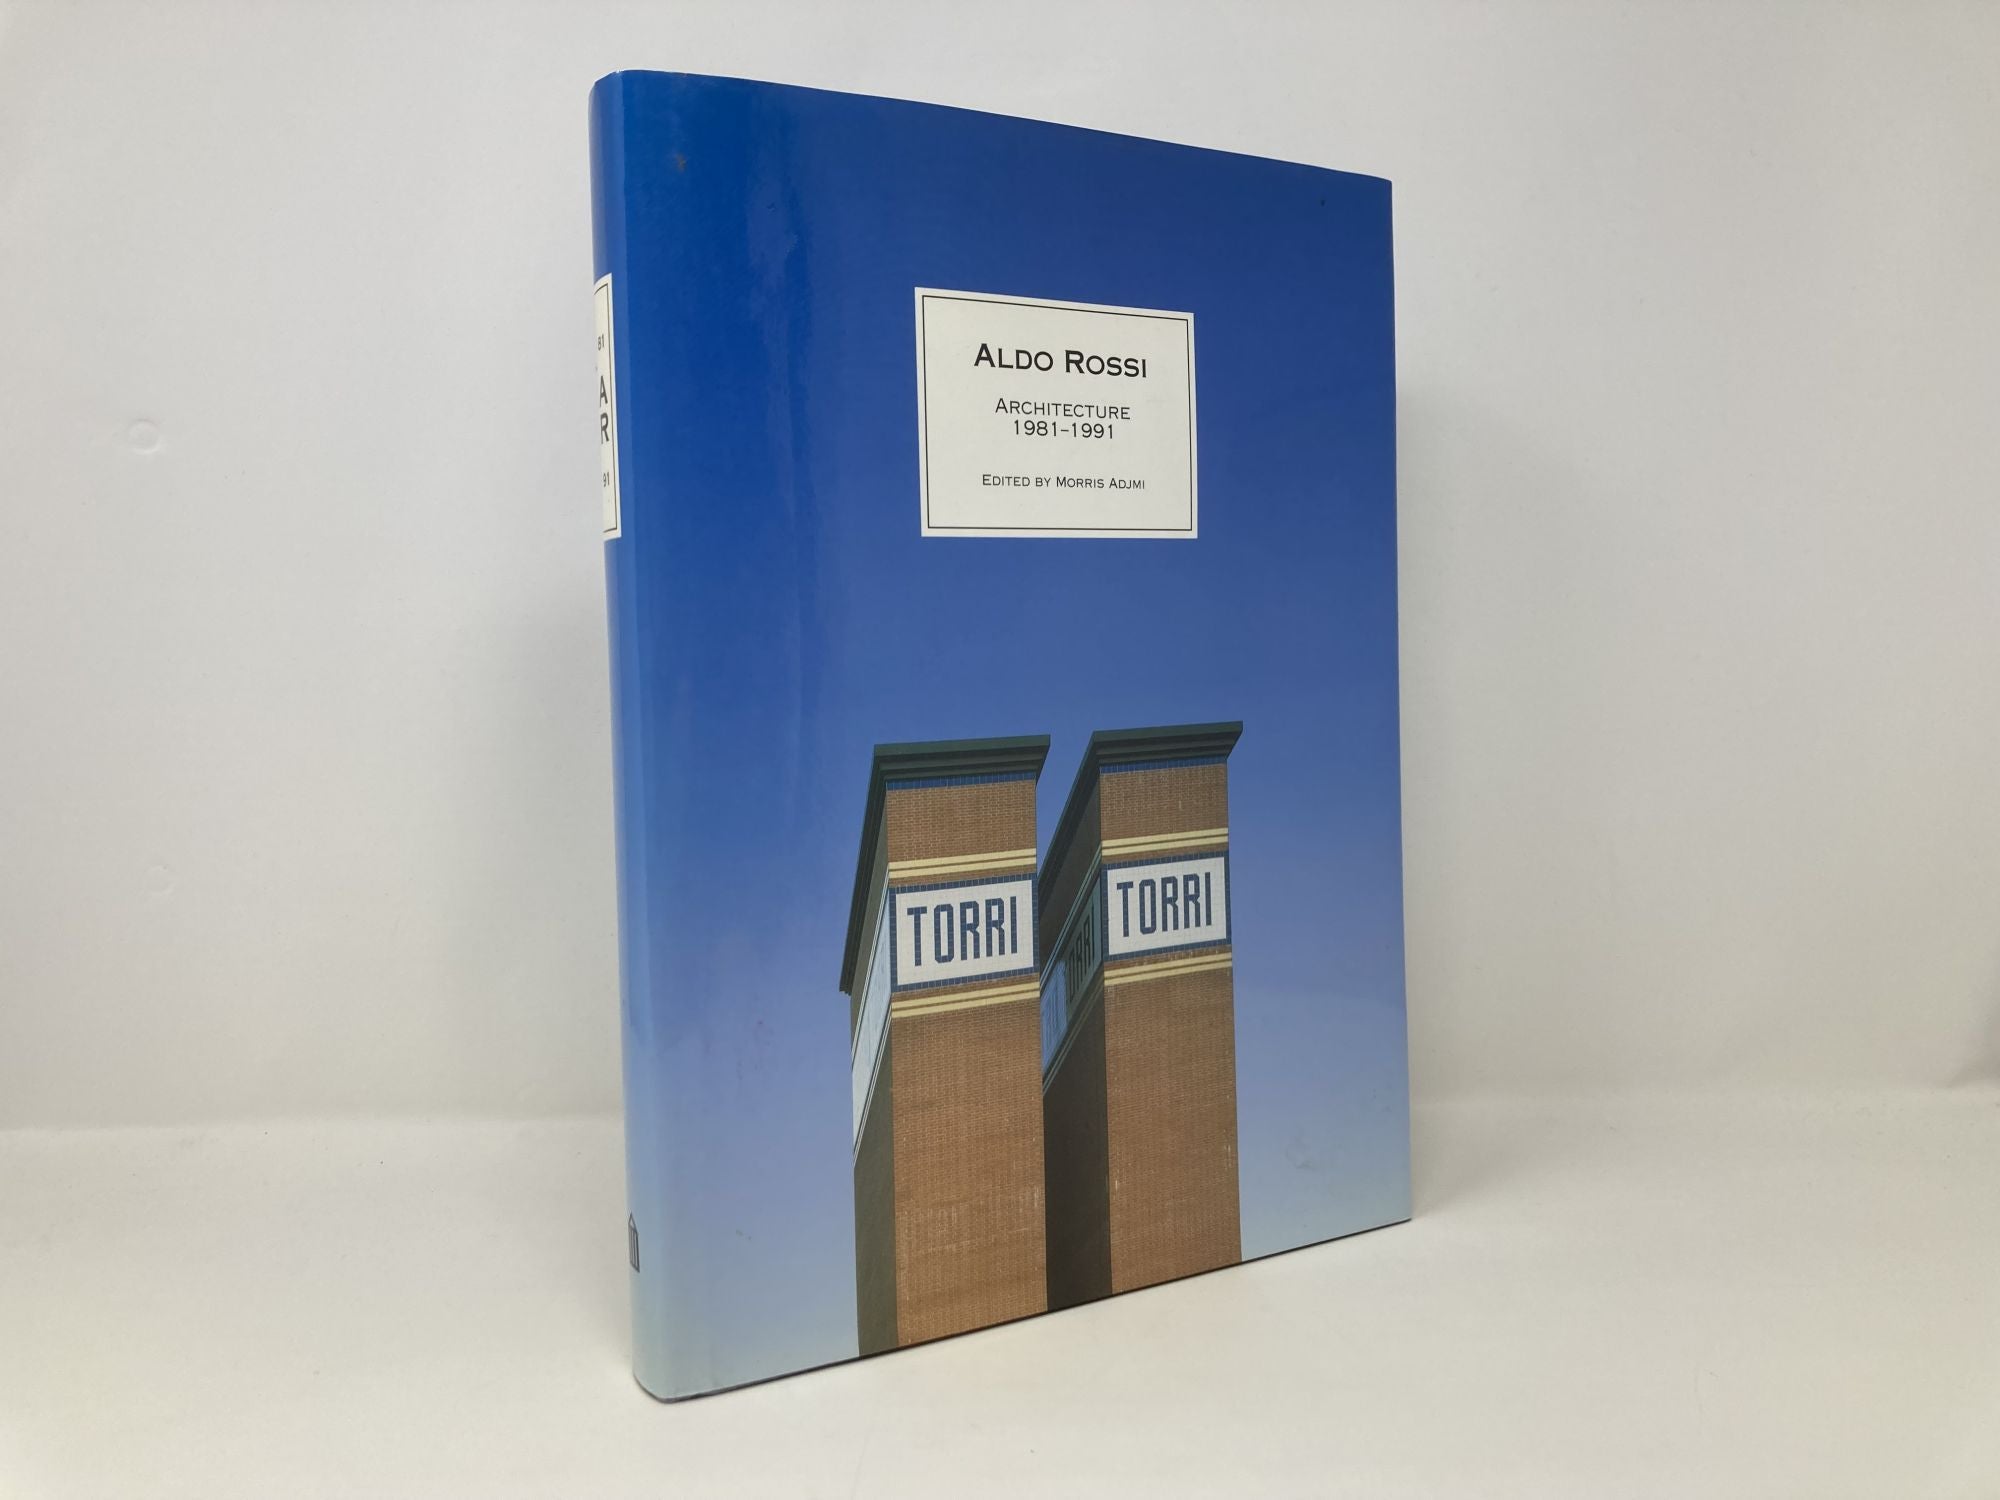 Aldo Rossi: Architecture 1981-1991 by Morris Adjmi on Sag Harbor Books